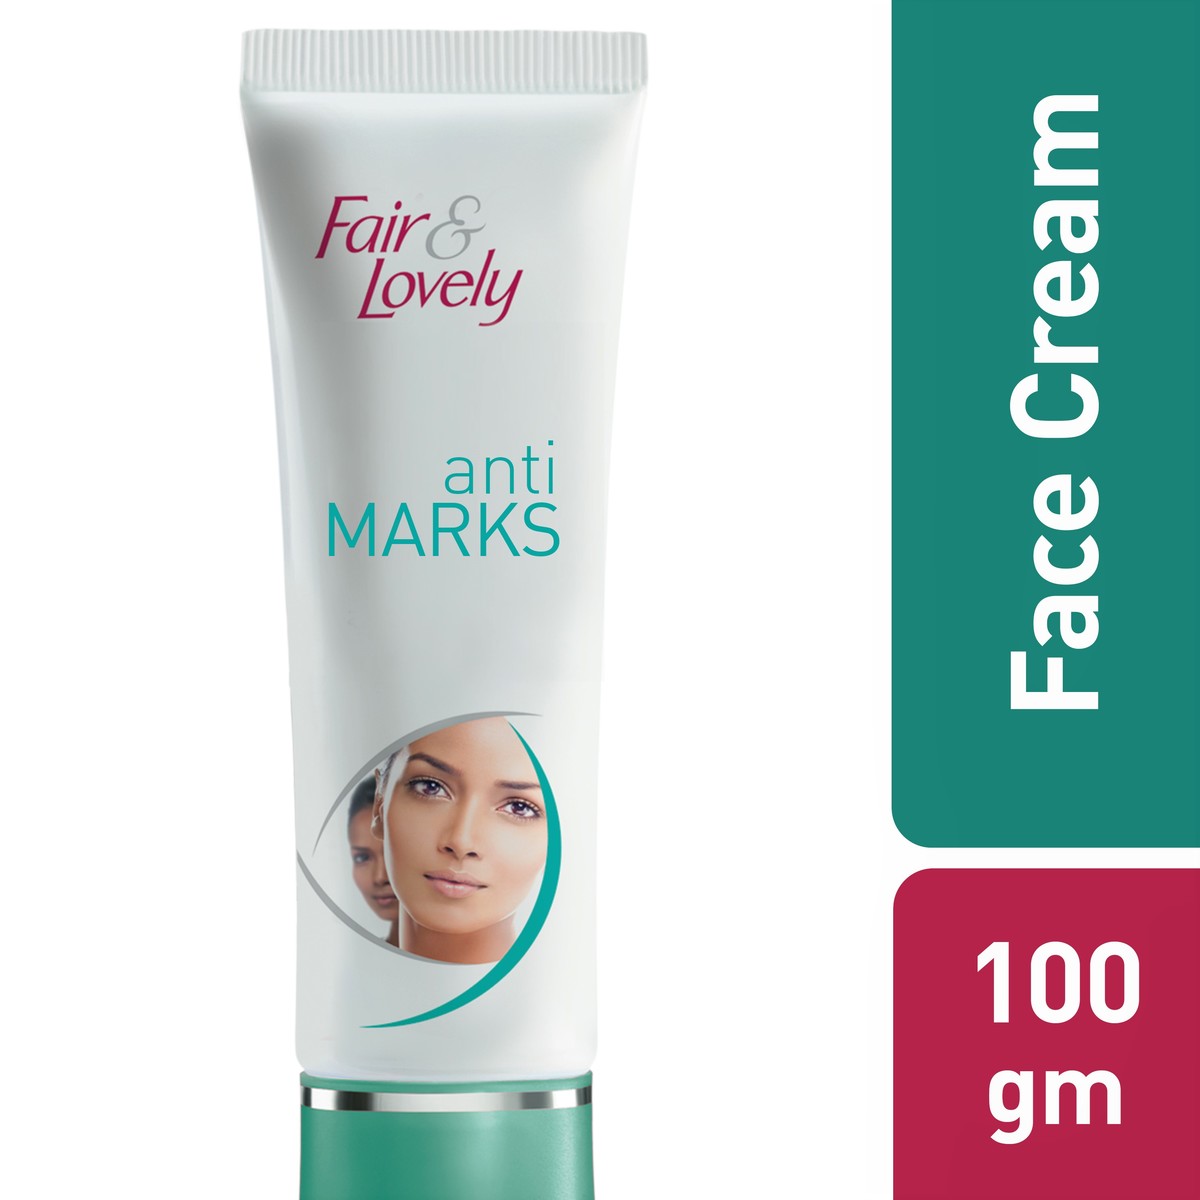 fair & lovely anti marks cream how to use